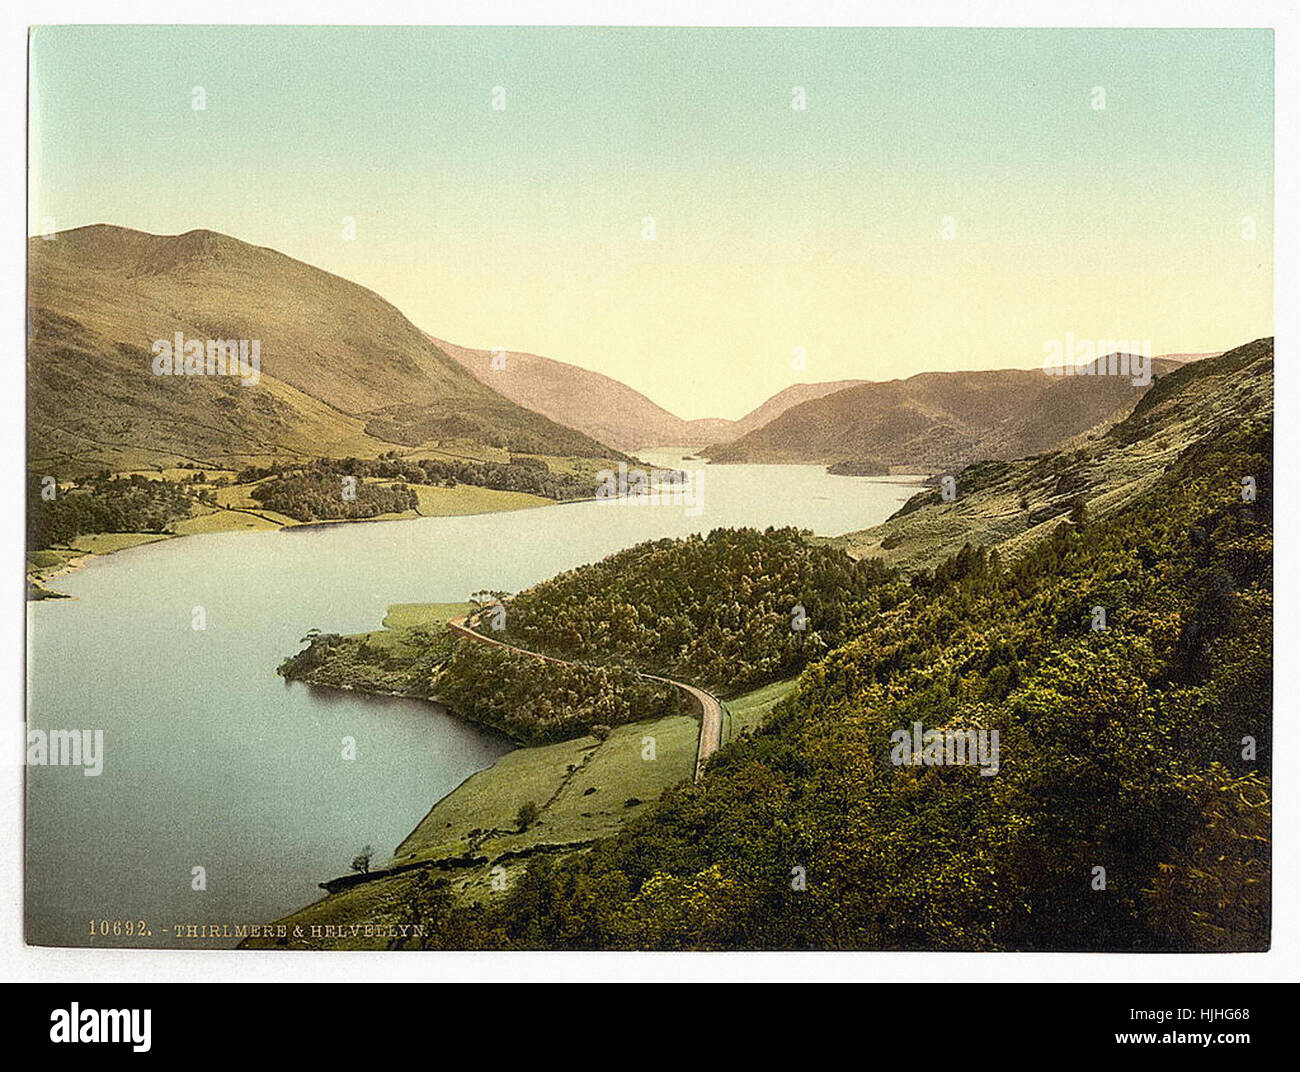 Lakelandpoeten und Thirlmere, Lake District, England - Photochrom XIXth Jahrhundert Stockfoto